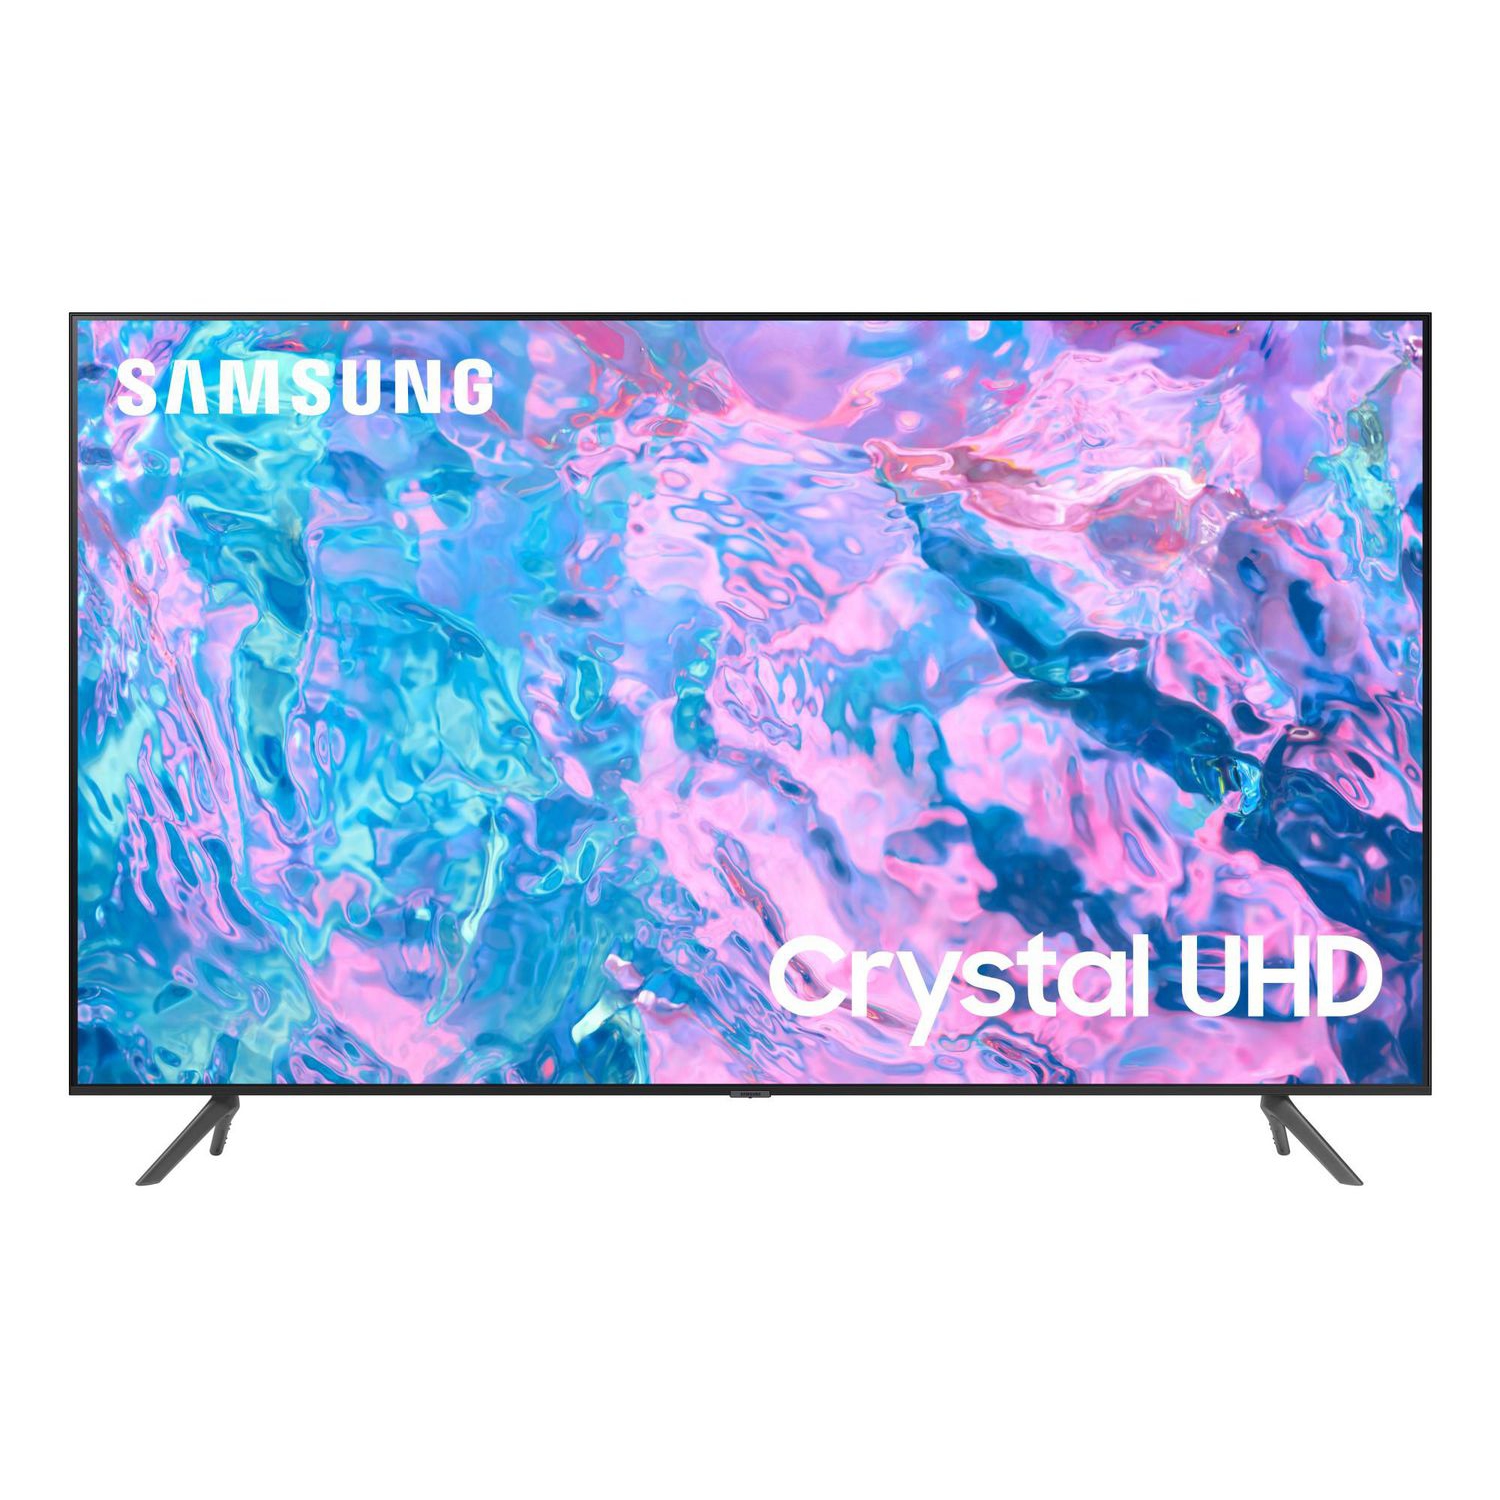 REFURBISHED (GOOD) - SAMSUNG 65" Class CU7000-Series Crystal Ultra HD 4K Smart TV ( UN65CU7000D / UN65CU7000 )